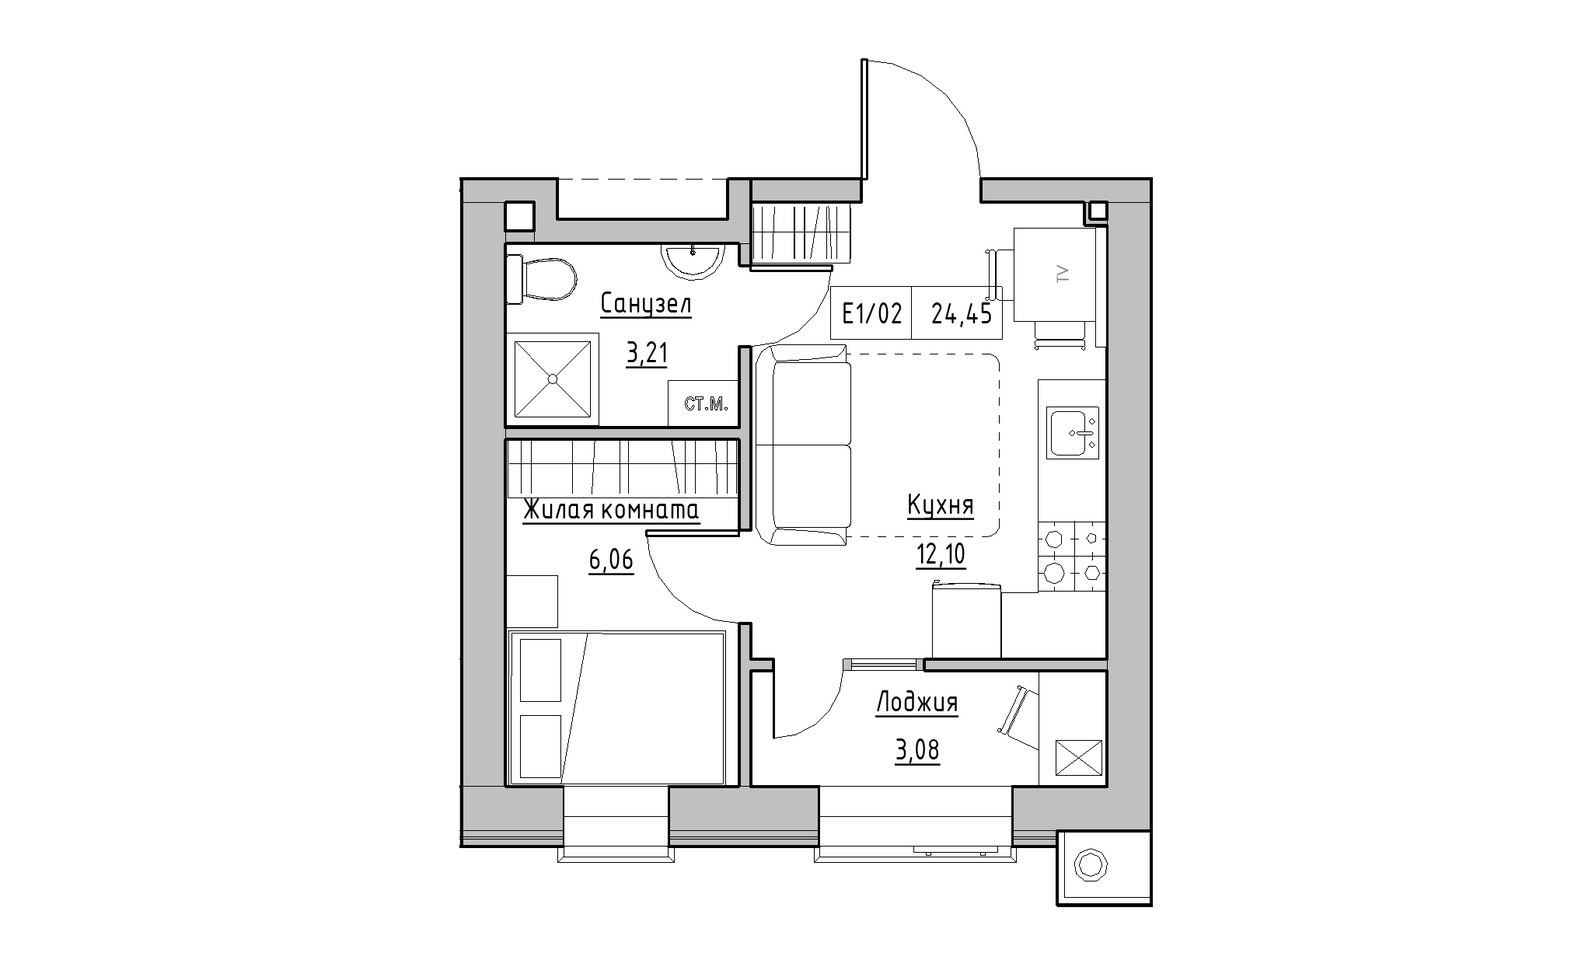 Planning 1-rm flats area 24.45m2, KS-014-04/0002.